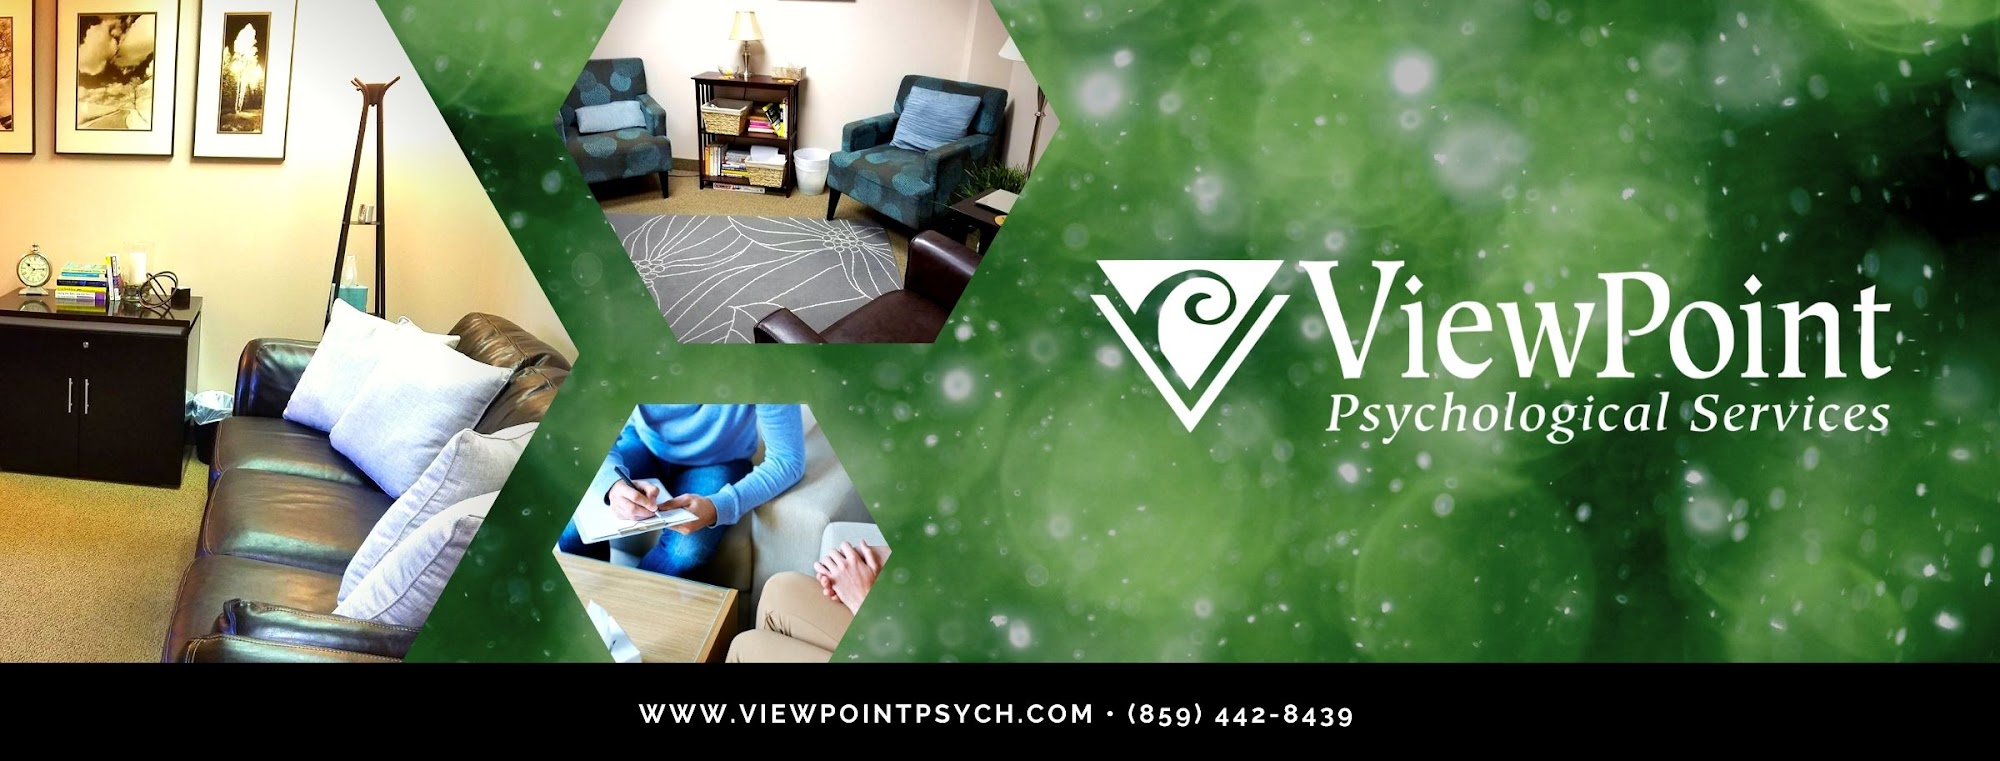 Viewpoint Psychological Services 2865 Chancellor Dr Suite 105, Crestview Hills Kentucky 41017